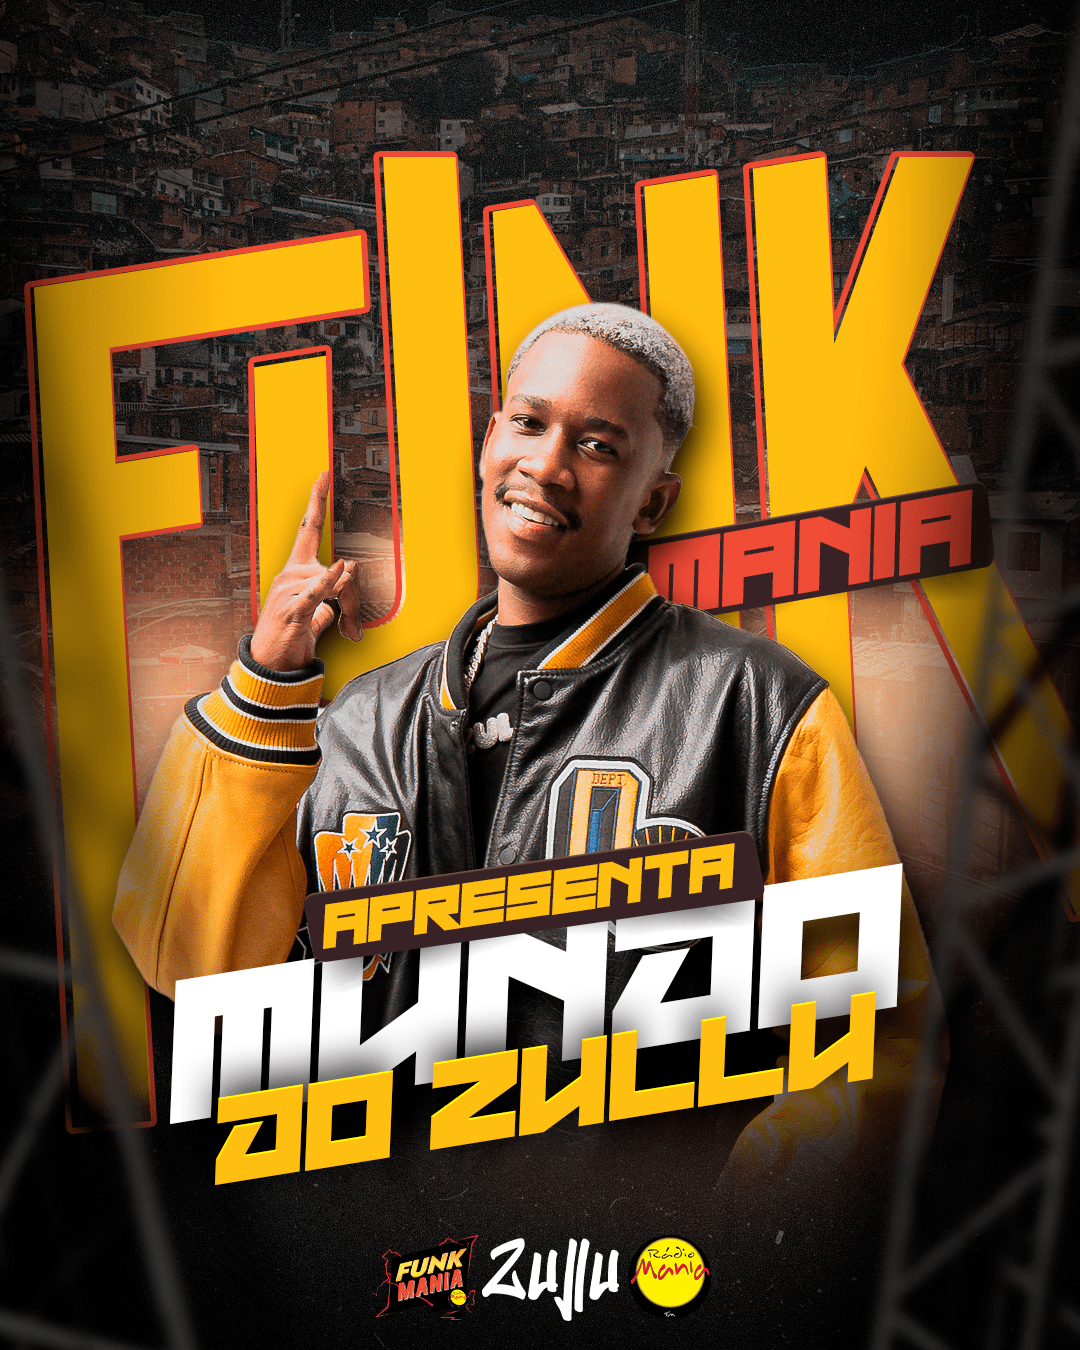 DJ Zullu estreia programa “Funk Mania” na Rádio Mania